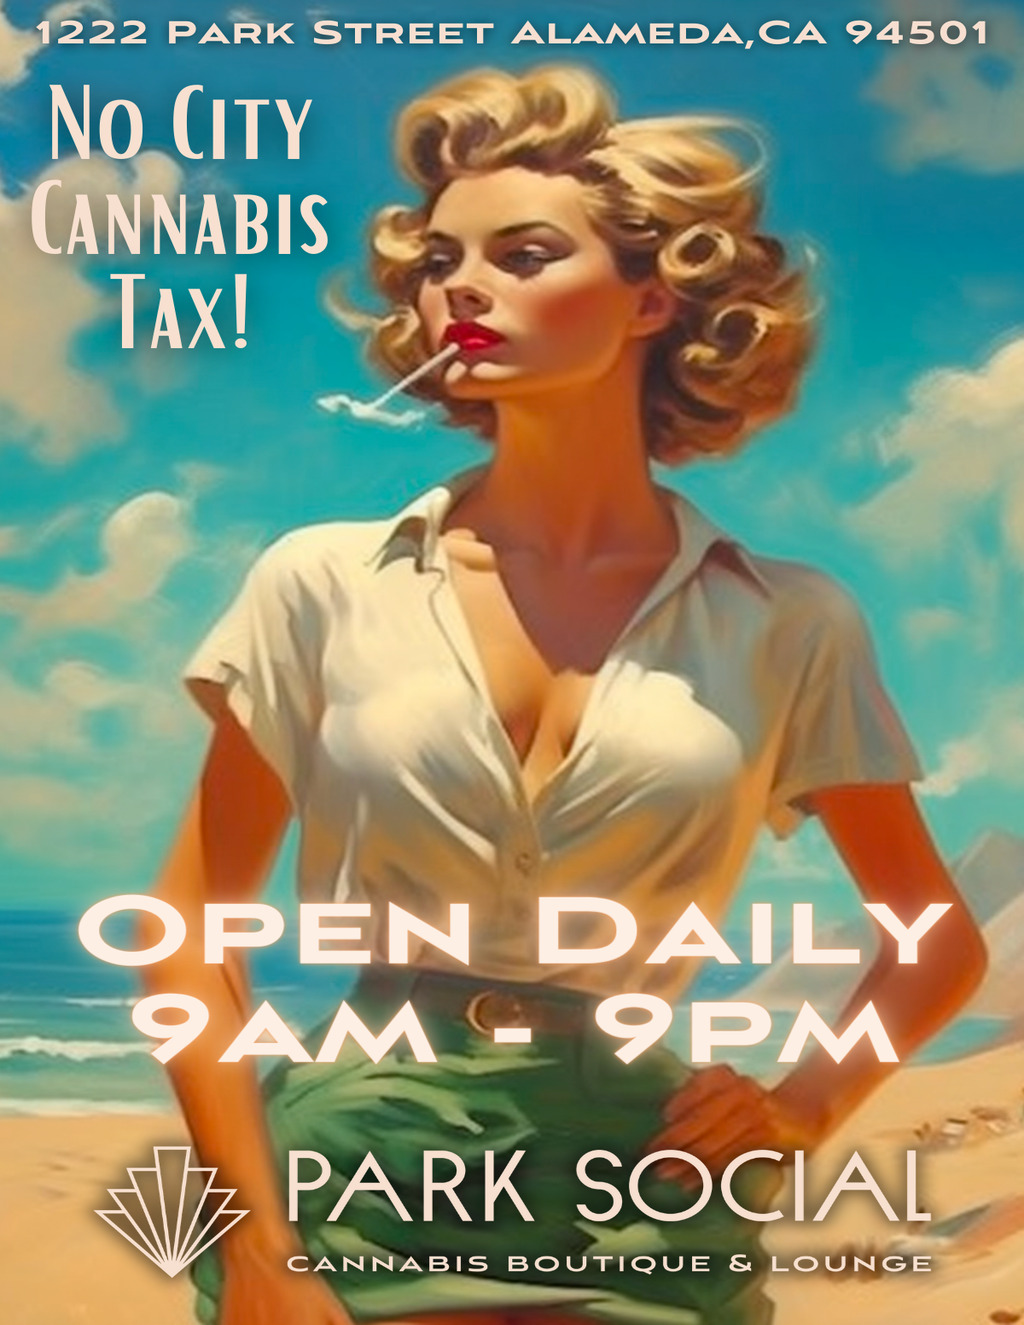 Park Social Welcome to Park Social Cannabis Boutique   Lounge  promotion flier on Digifli com